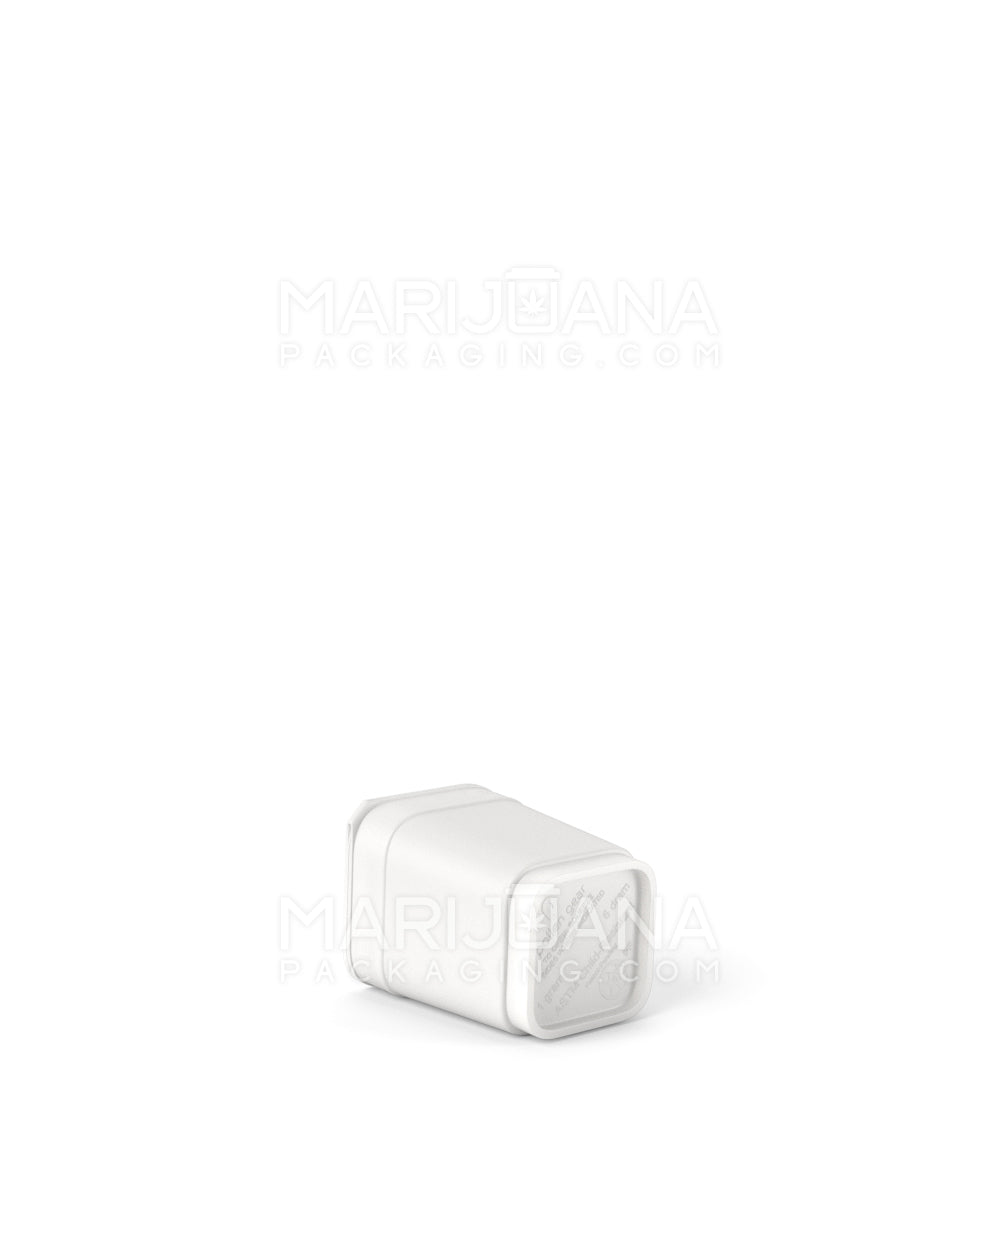 POLLEN GEAR | 100% Recyclable Opaque White Pop Box Pop Top Bottles | 6dr - 1g - 1632 Count - 7